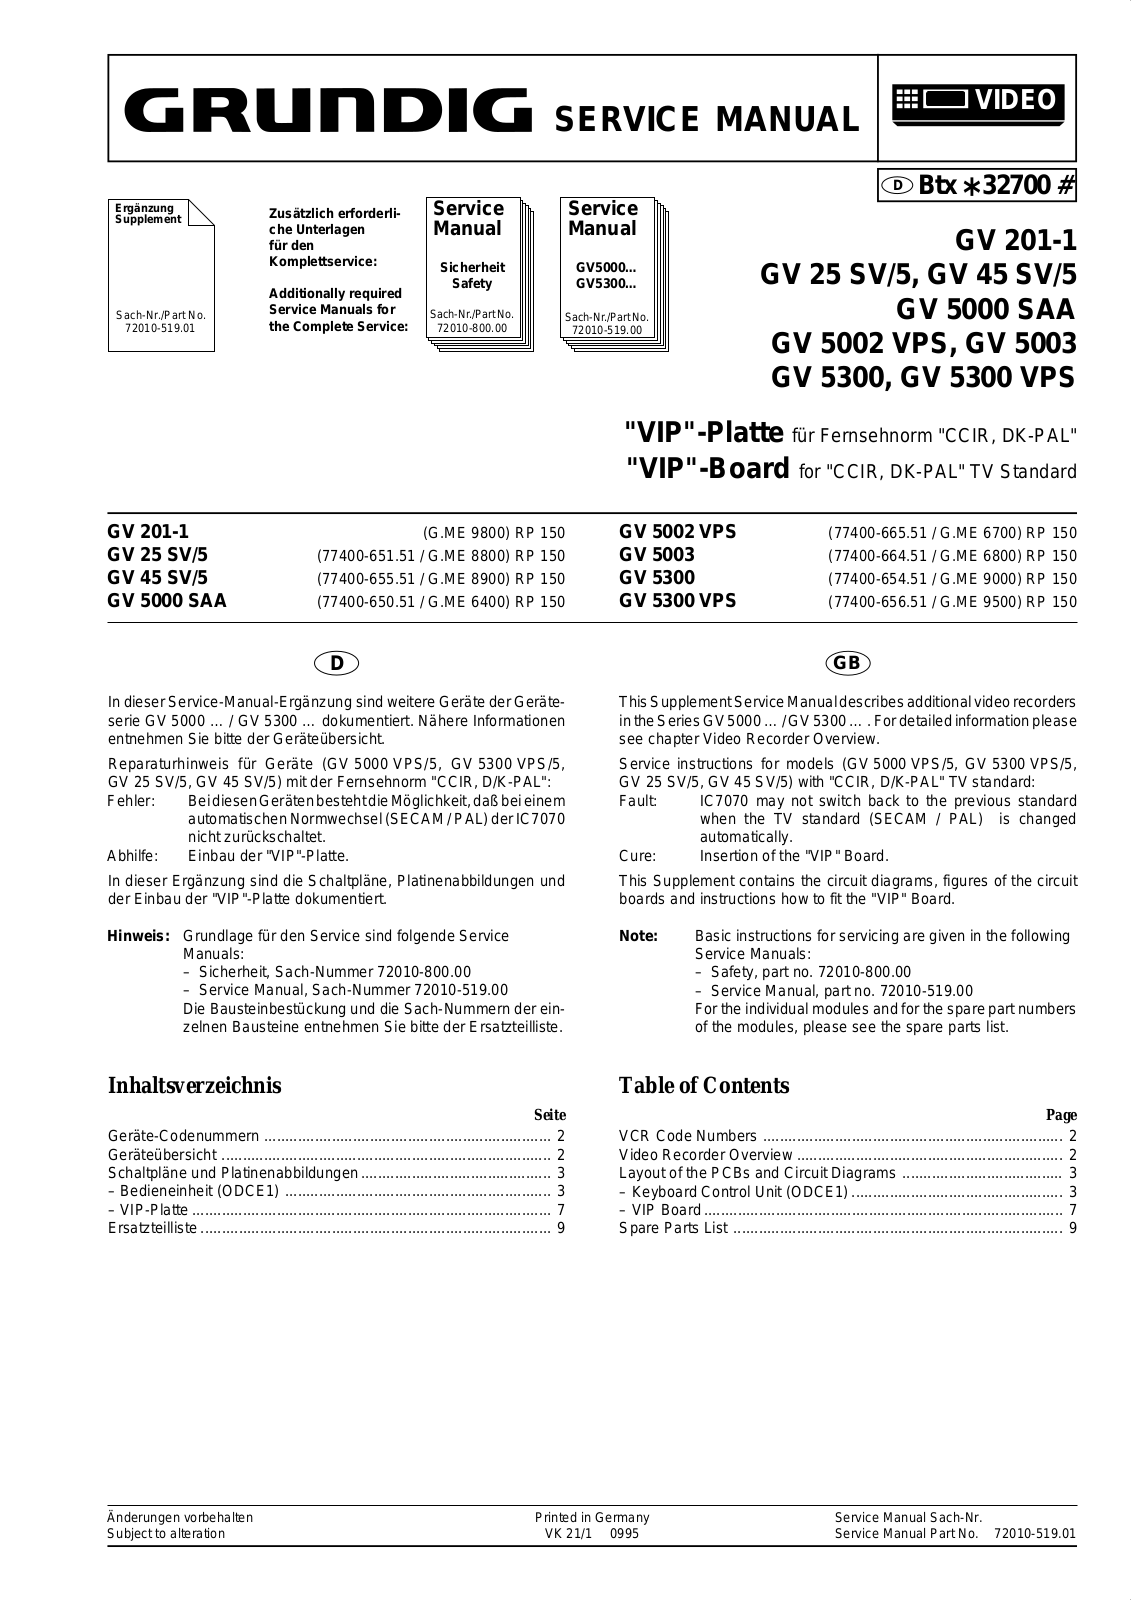 GRUNDIG gv-2000, gv2020 Service Manual